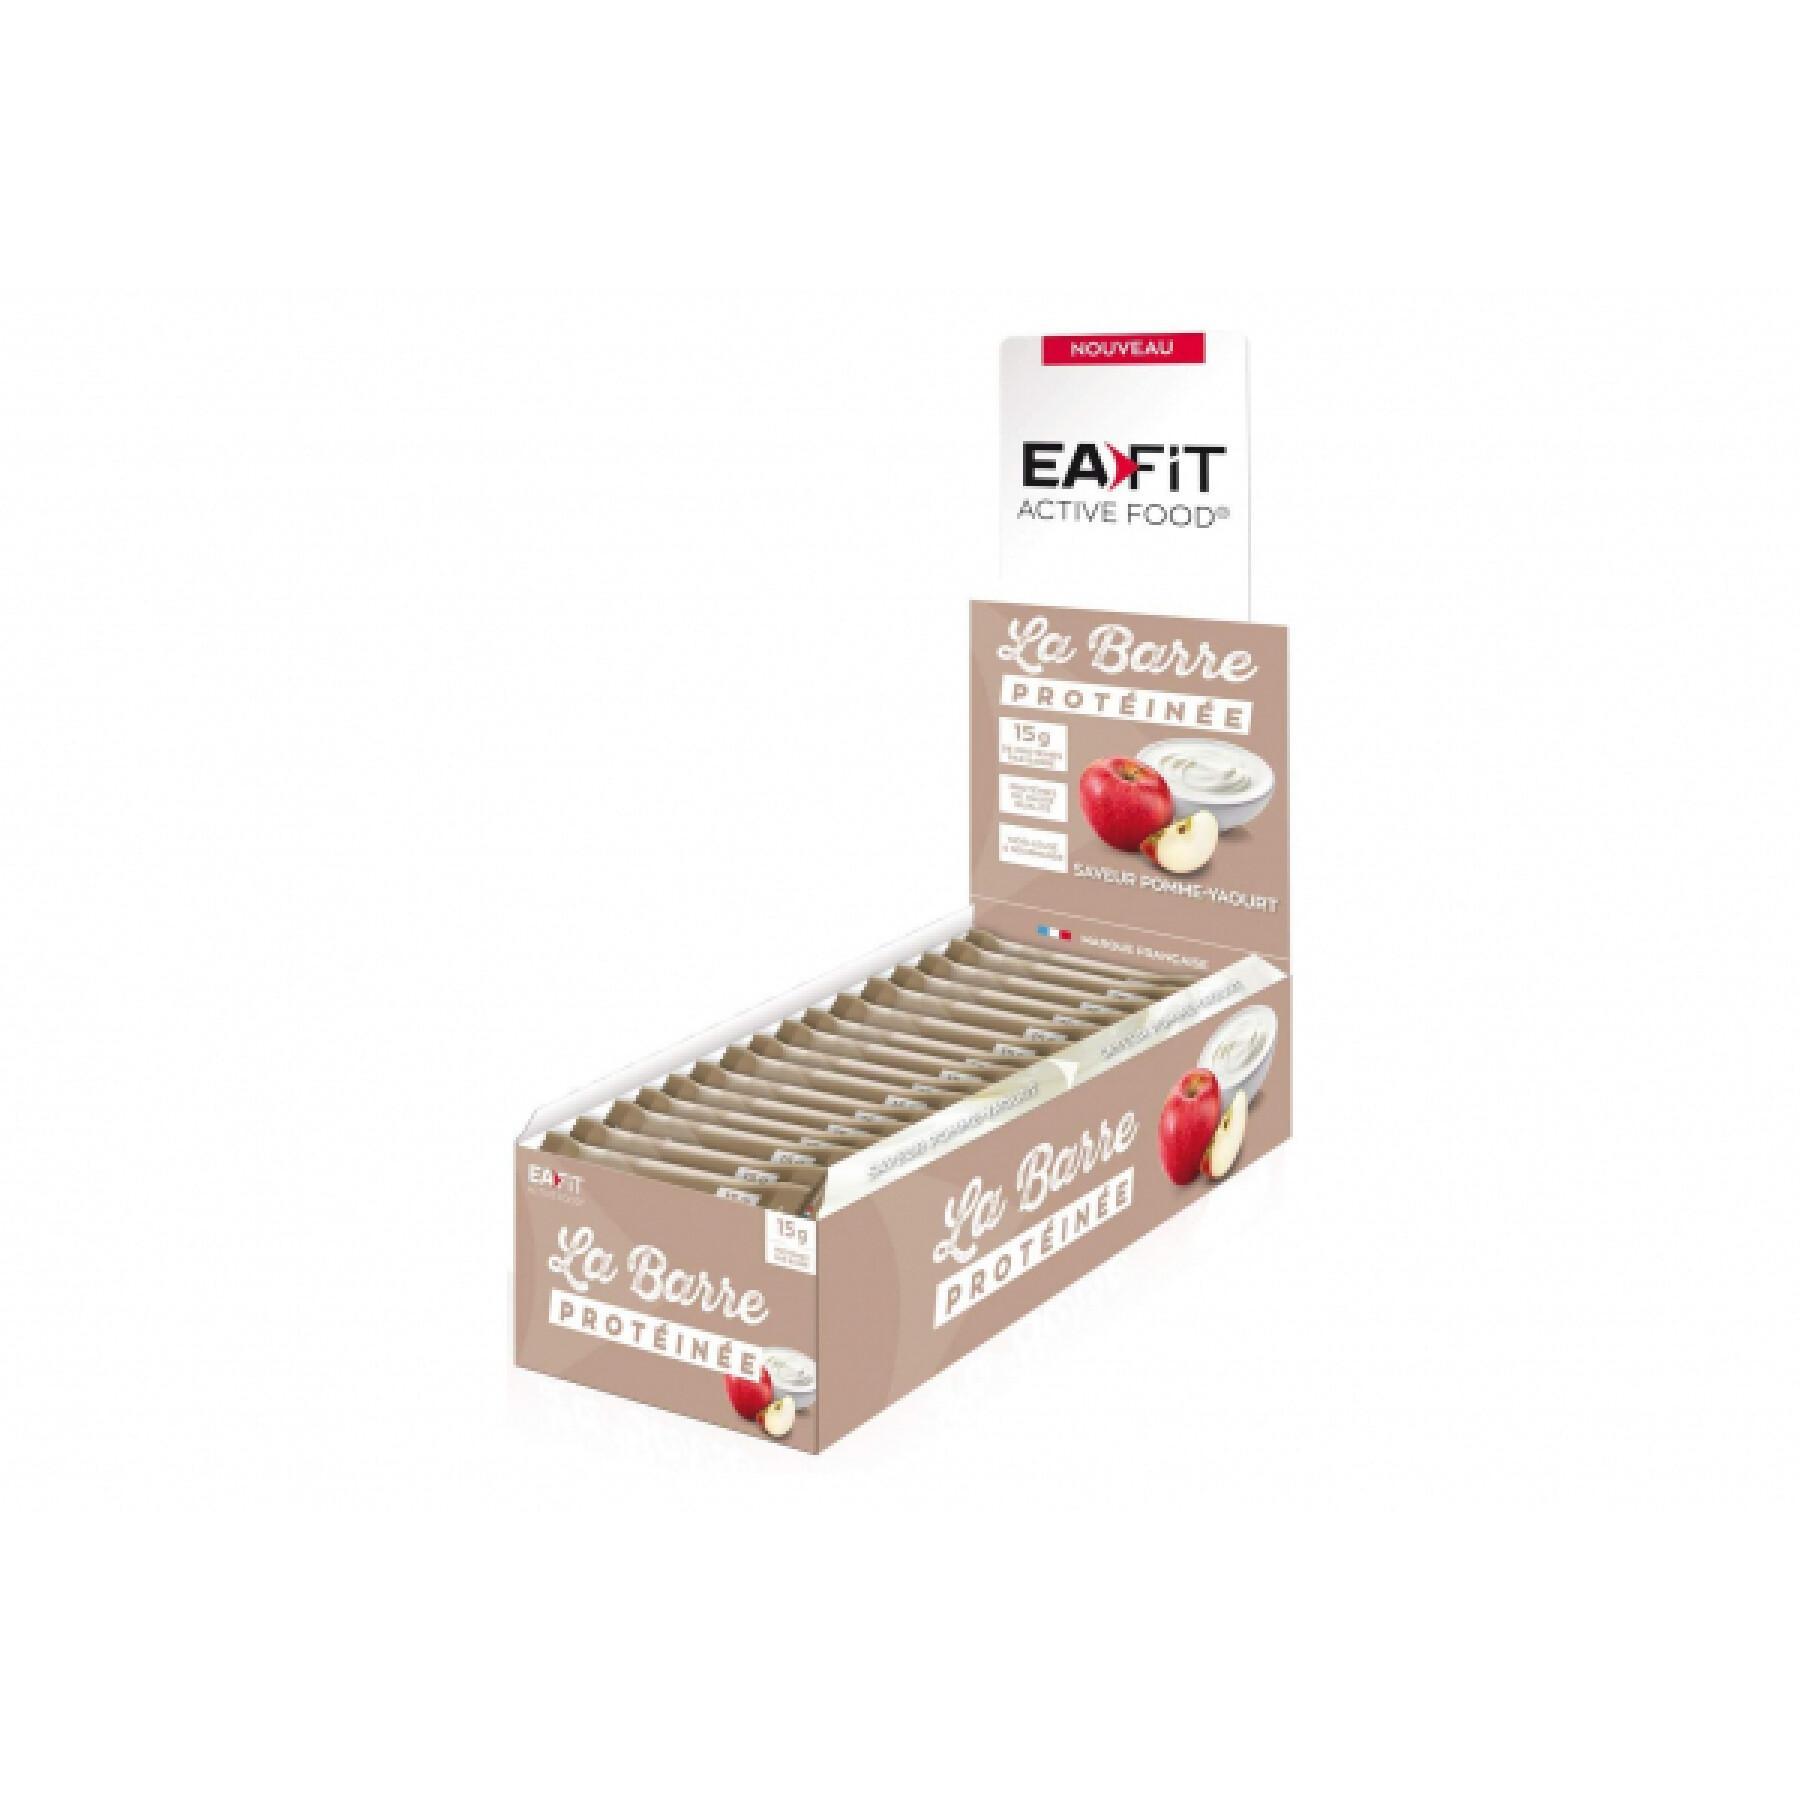 Baton proteinowy EA Fit x24 Pomme/Yaourt